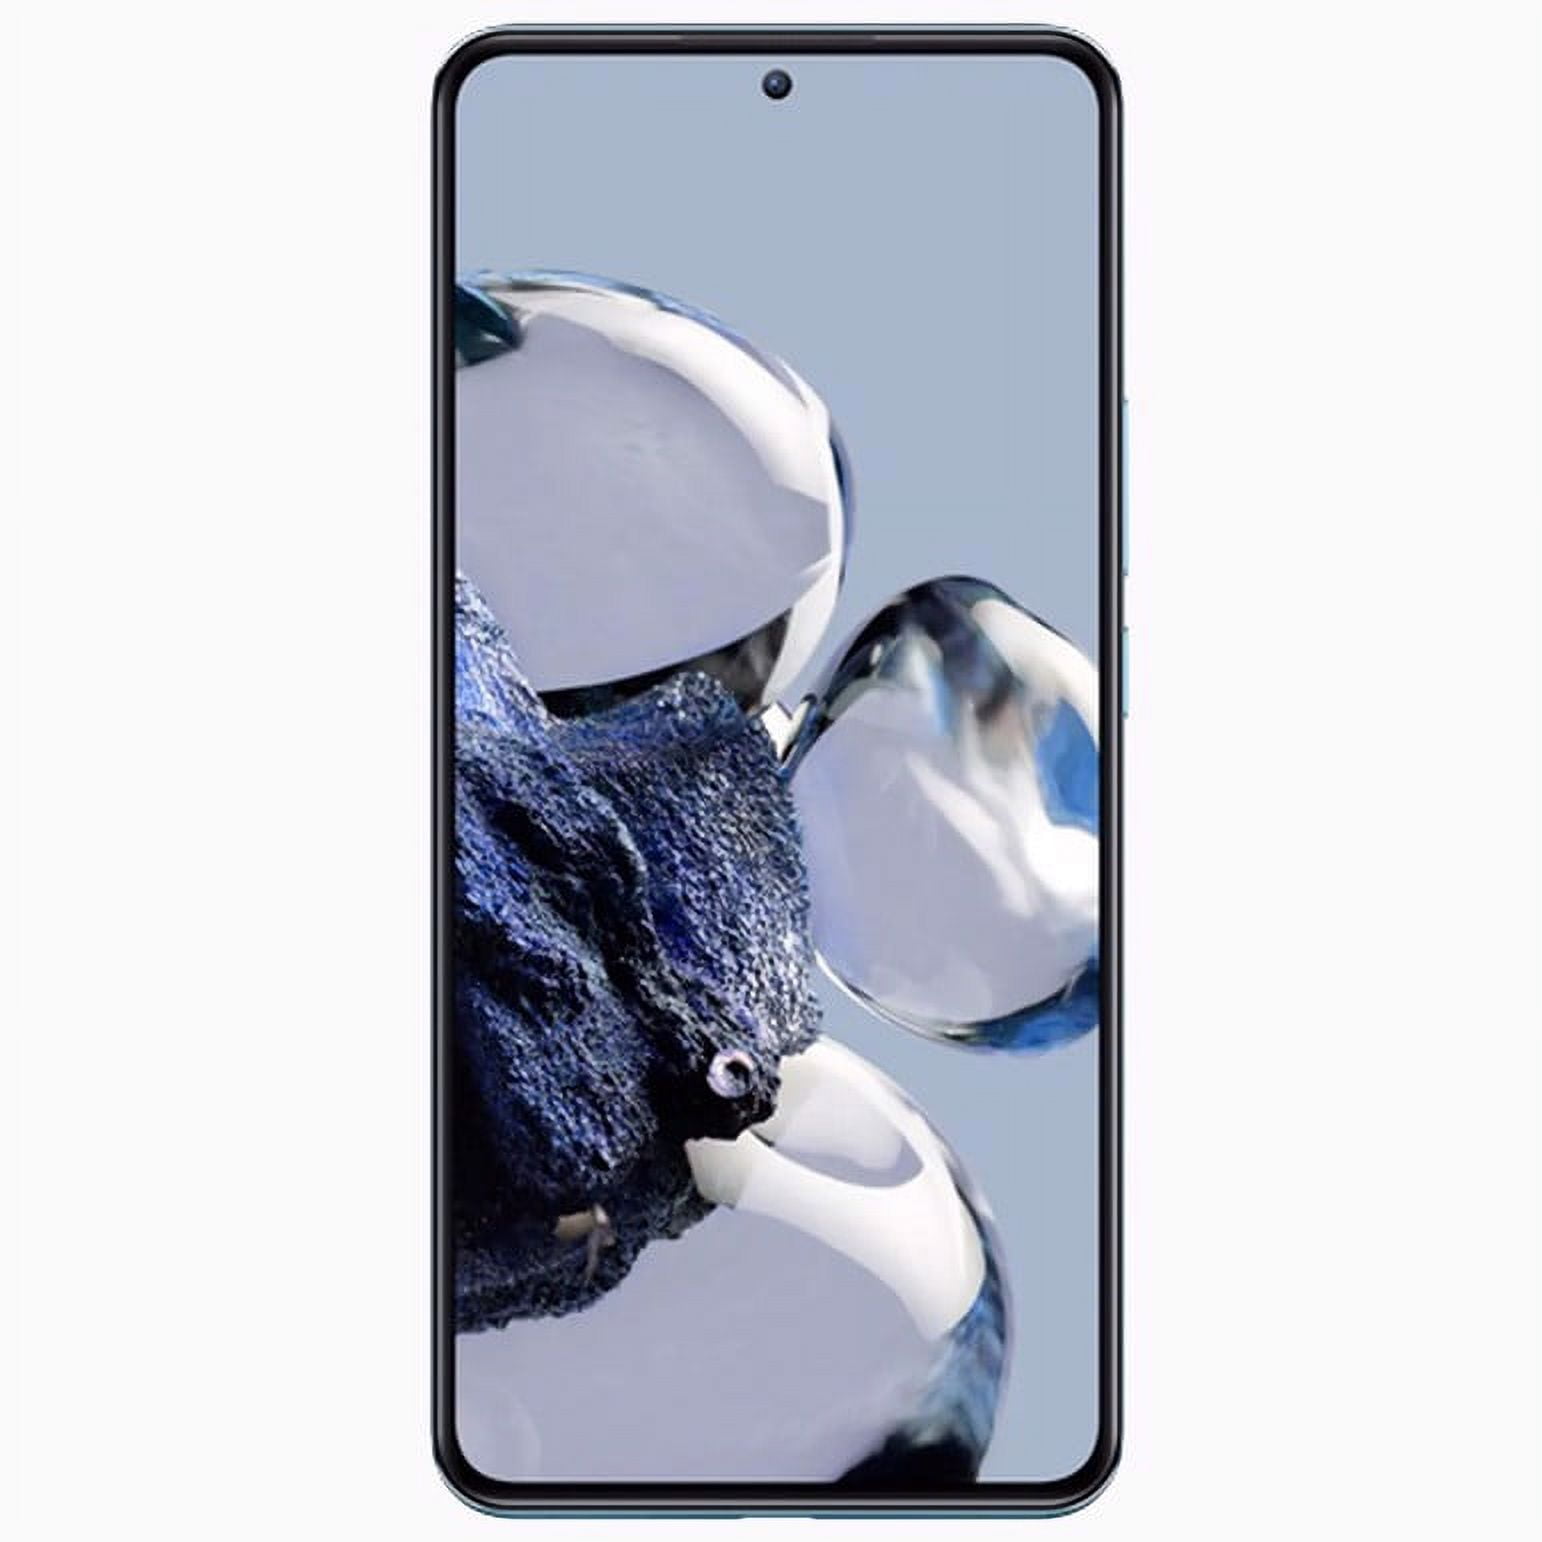 Xiaomi 12T Pro Dual-SIM 256GB ROM + 12GB RAM (GSM | CDMA) Factory Unlocked  5G Smartphone (Blue) - International Version - Walmart.com